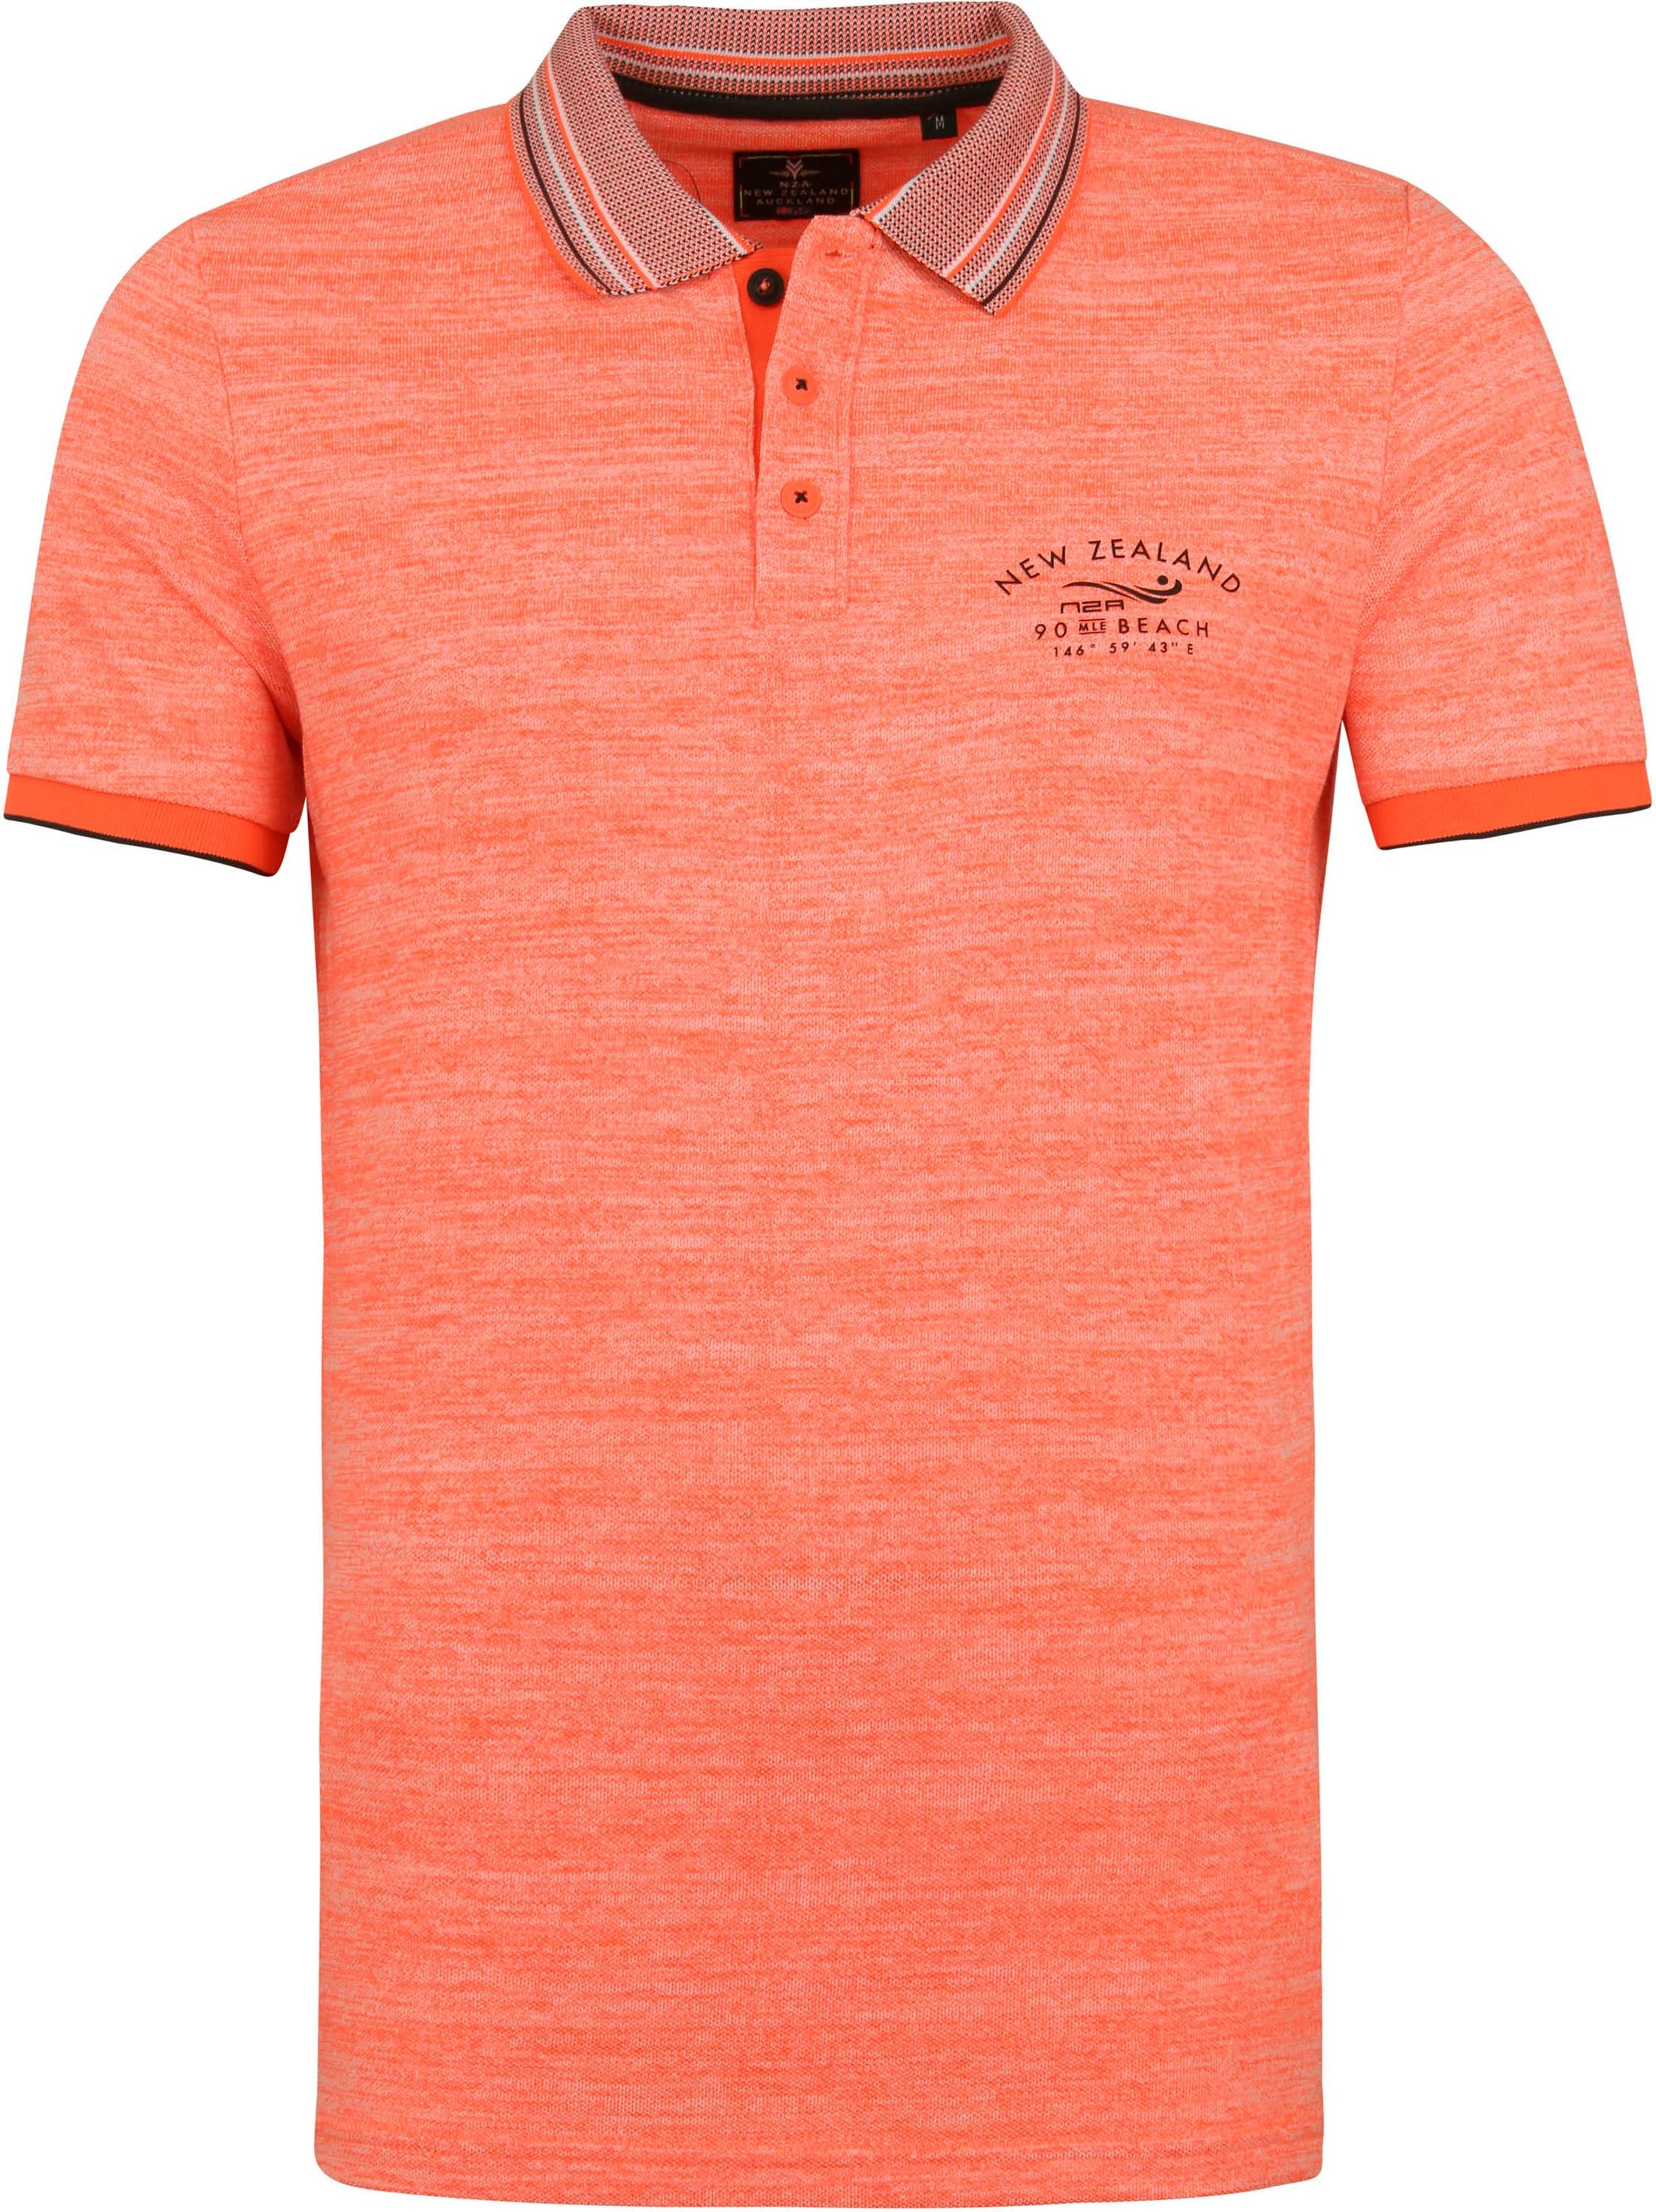 New Zealand Auckland - Nza polo shirt dobson peak orange size l